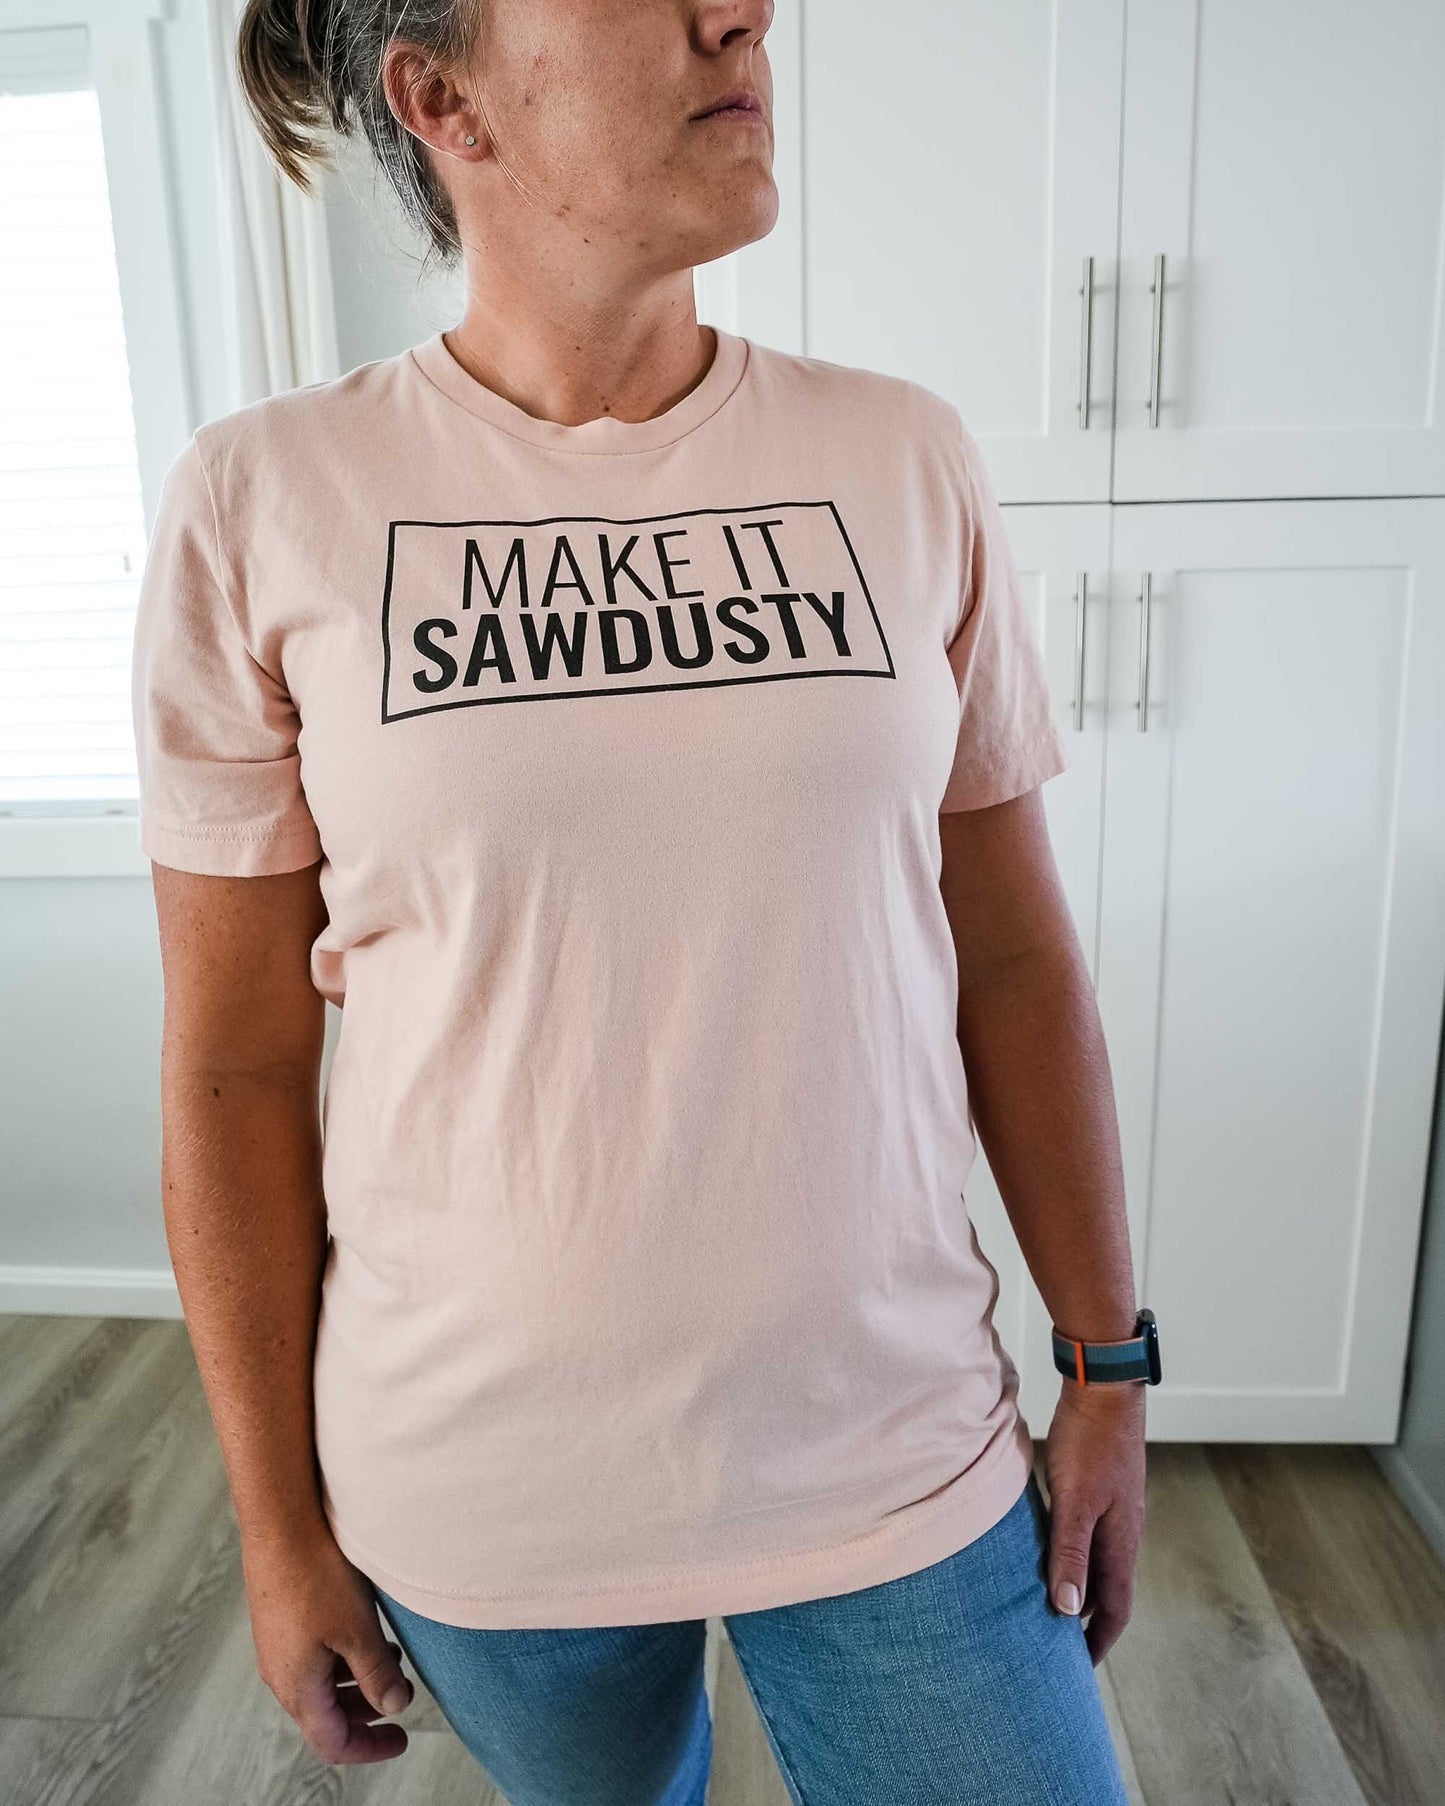 Make It Sawdusty Tee, Sawdust T-Shirt, Woodworking Shirt